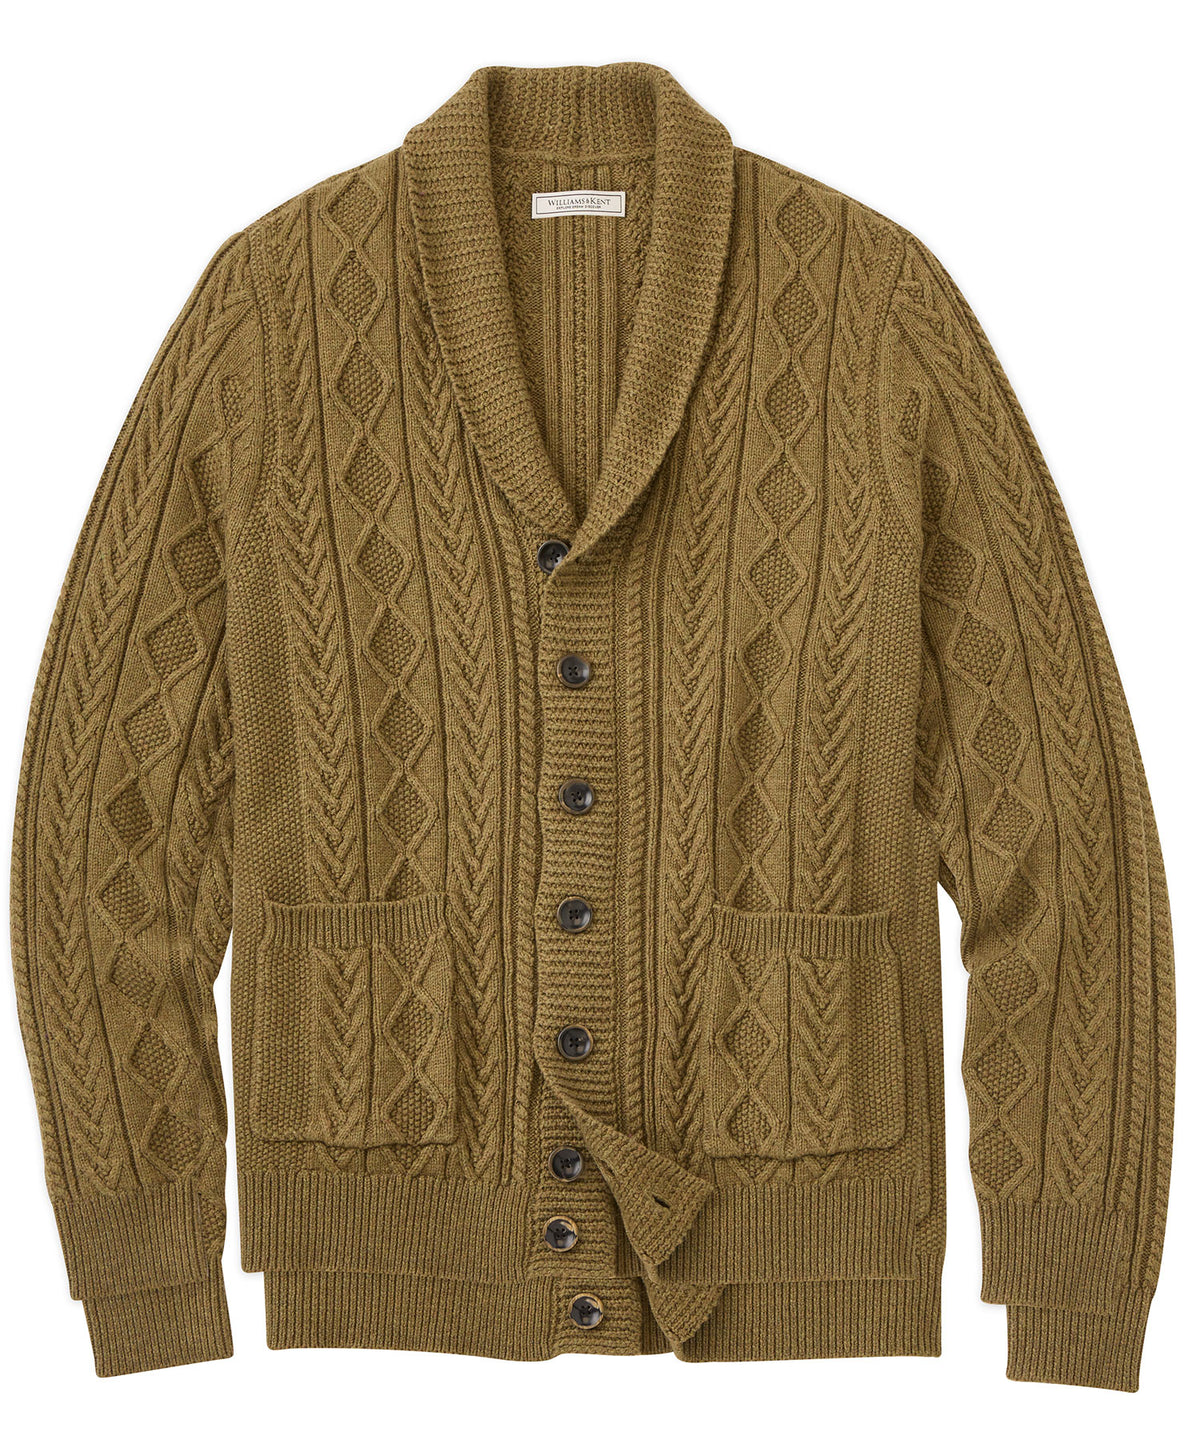 Shawl Collar Cable Cardigan Sweater